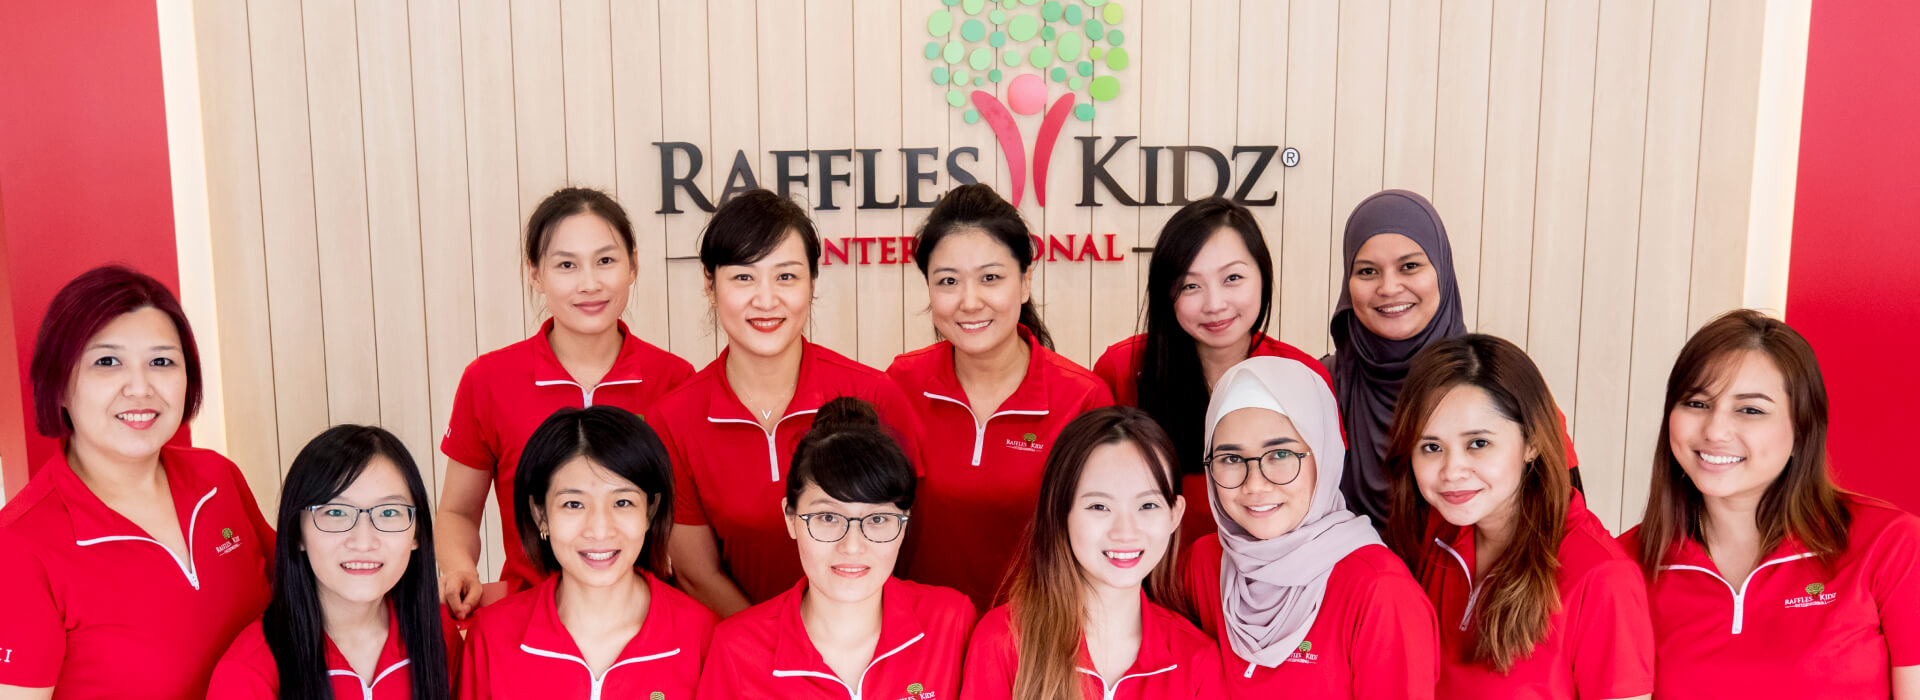 Raffles Kidz International | Best Preschool Singapore | Career